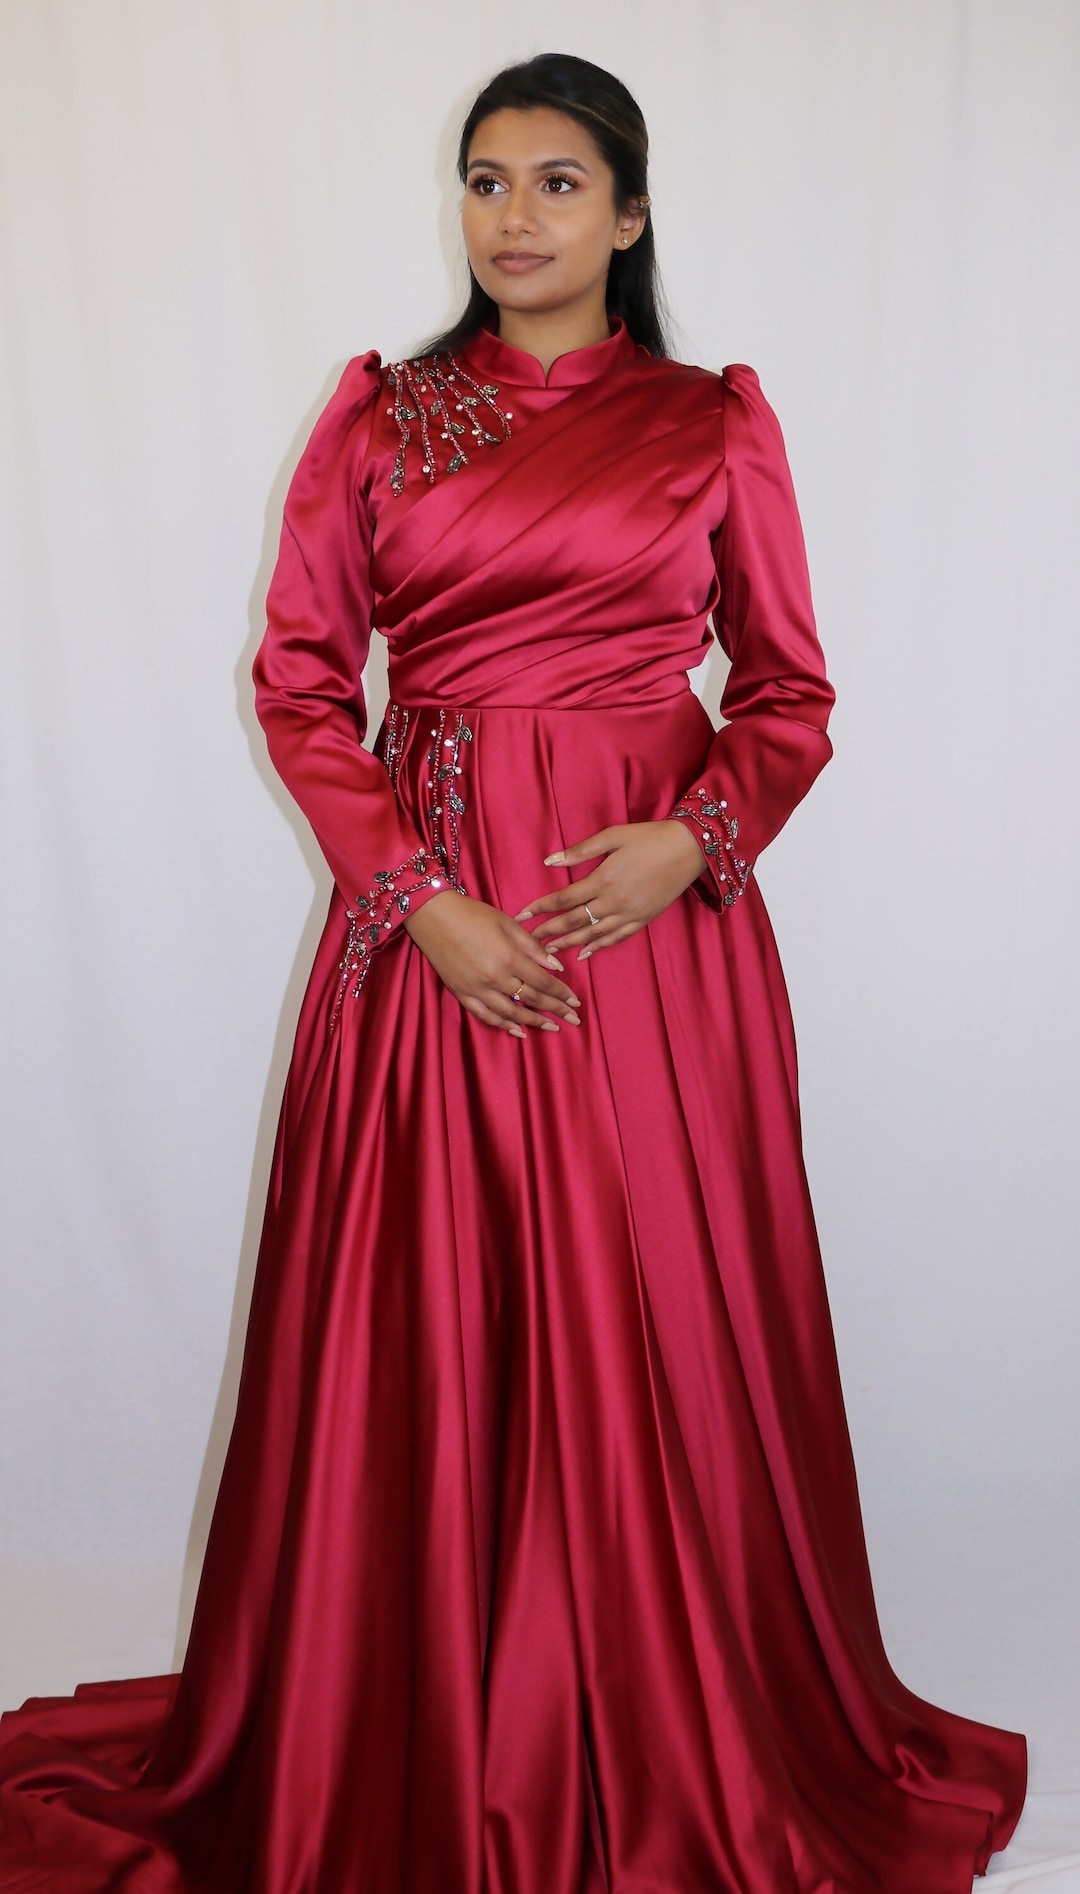 Cardinal Red Evening Gown Modest Maxi Evening Gown/dress - Etsy